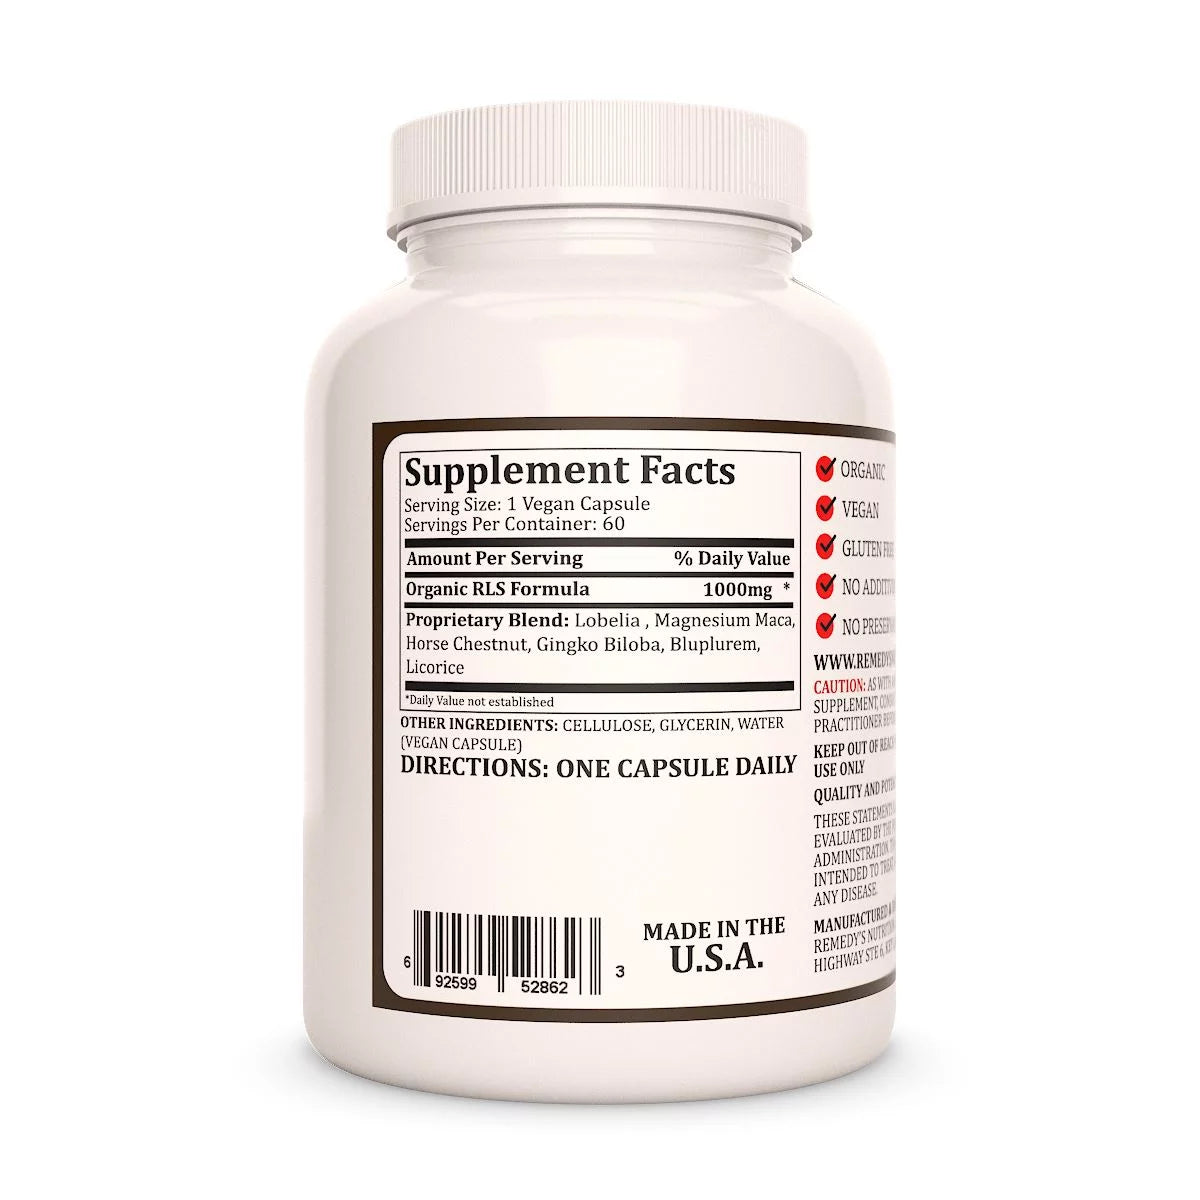 Image of Remedy's Nutrition® RLS Formula™ back bottle label. Supplement Facts, Ingredients: Magnesium, Horse Chestnut, Gingko